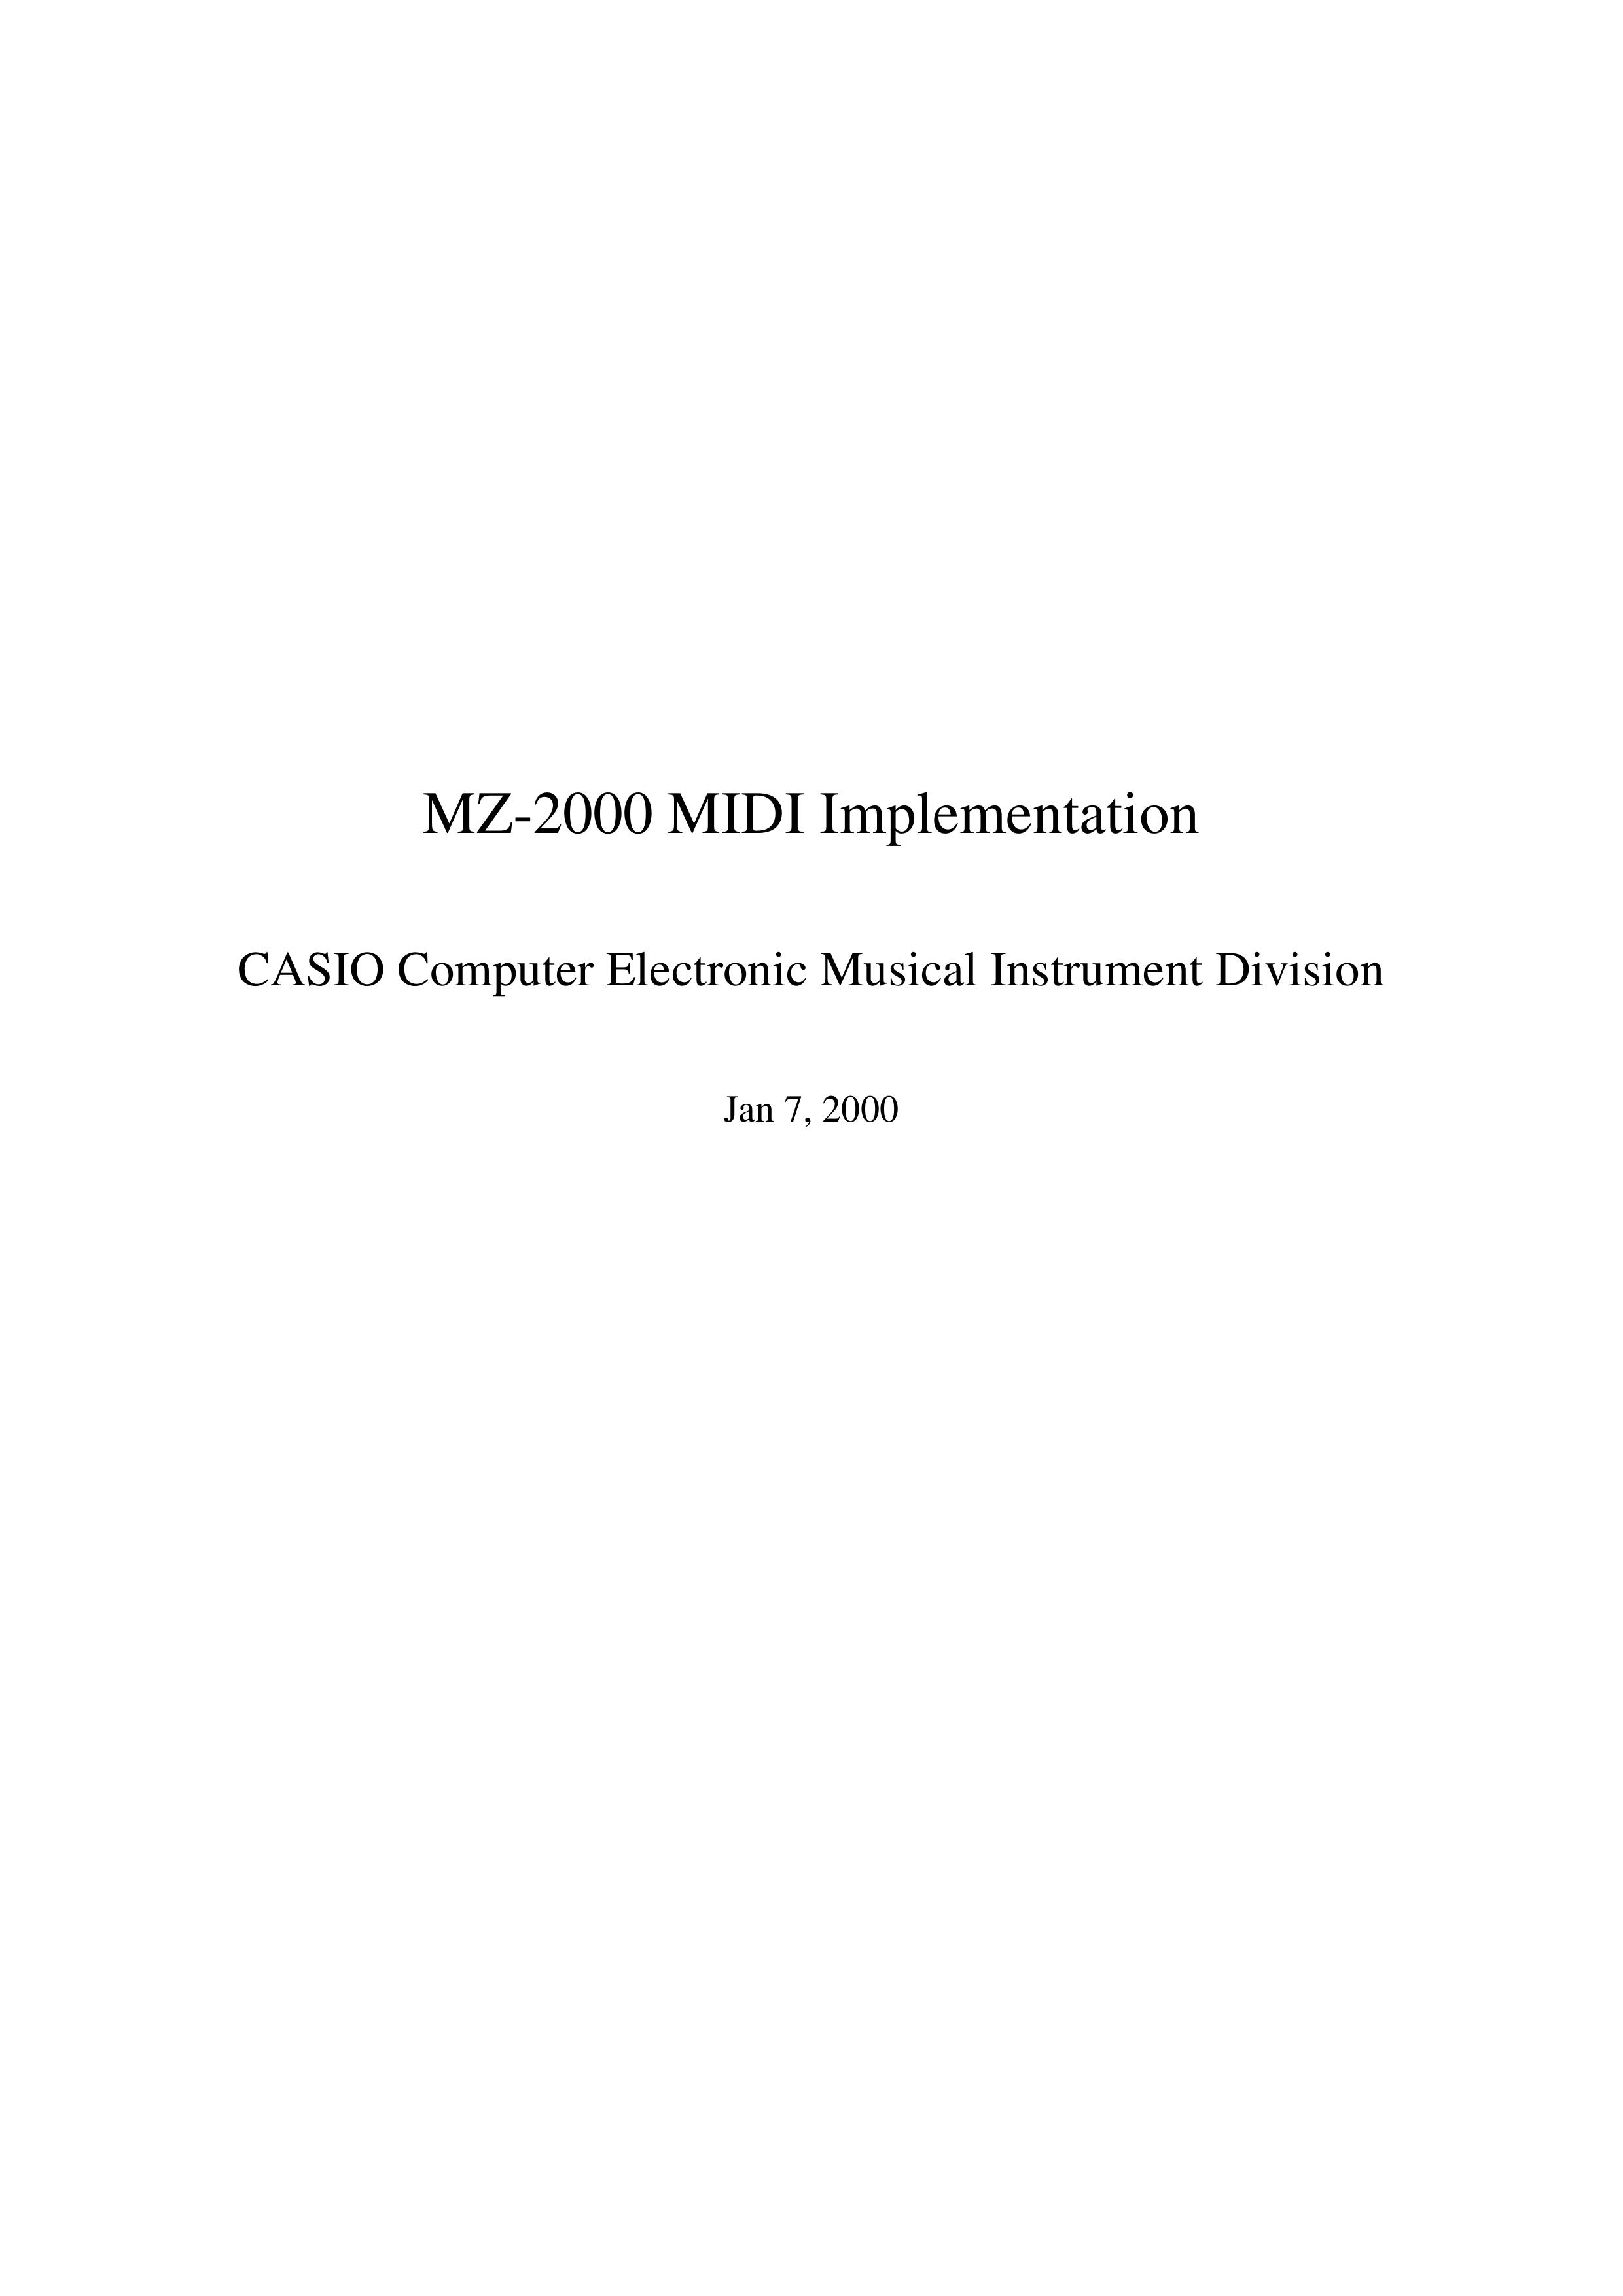 Casio MZ-2000 Musical Instrument User Manual